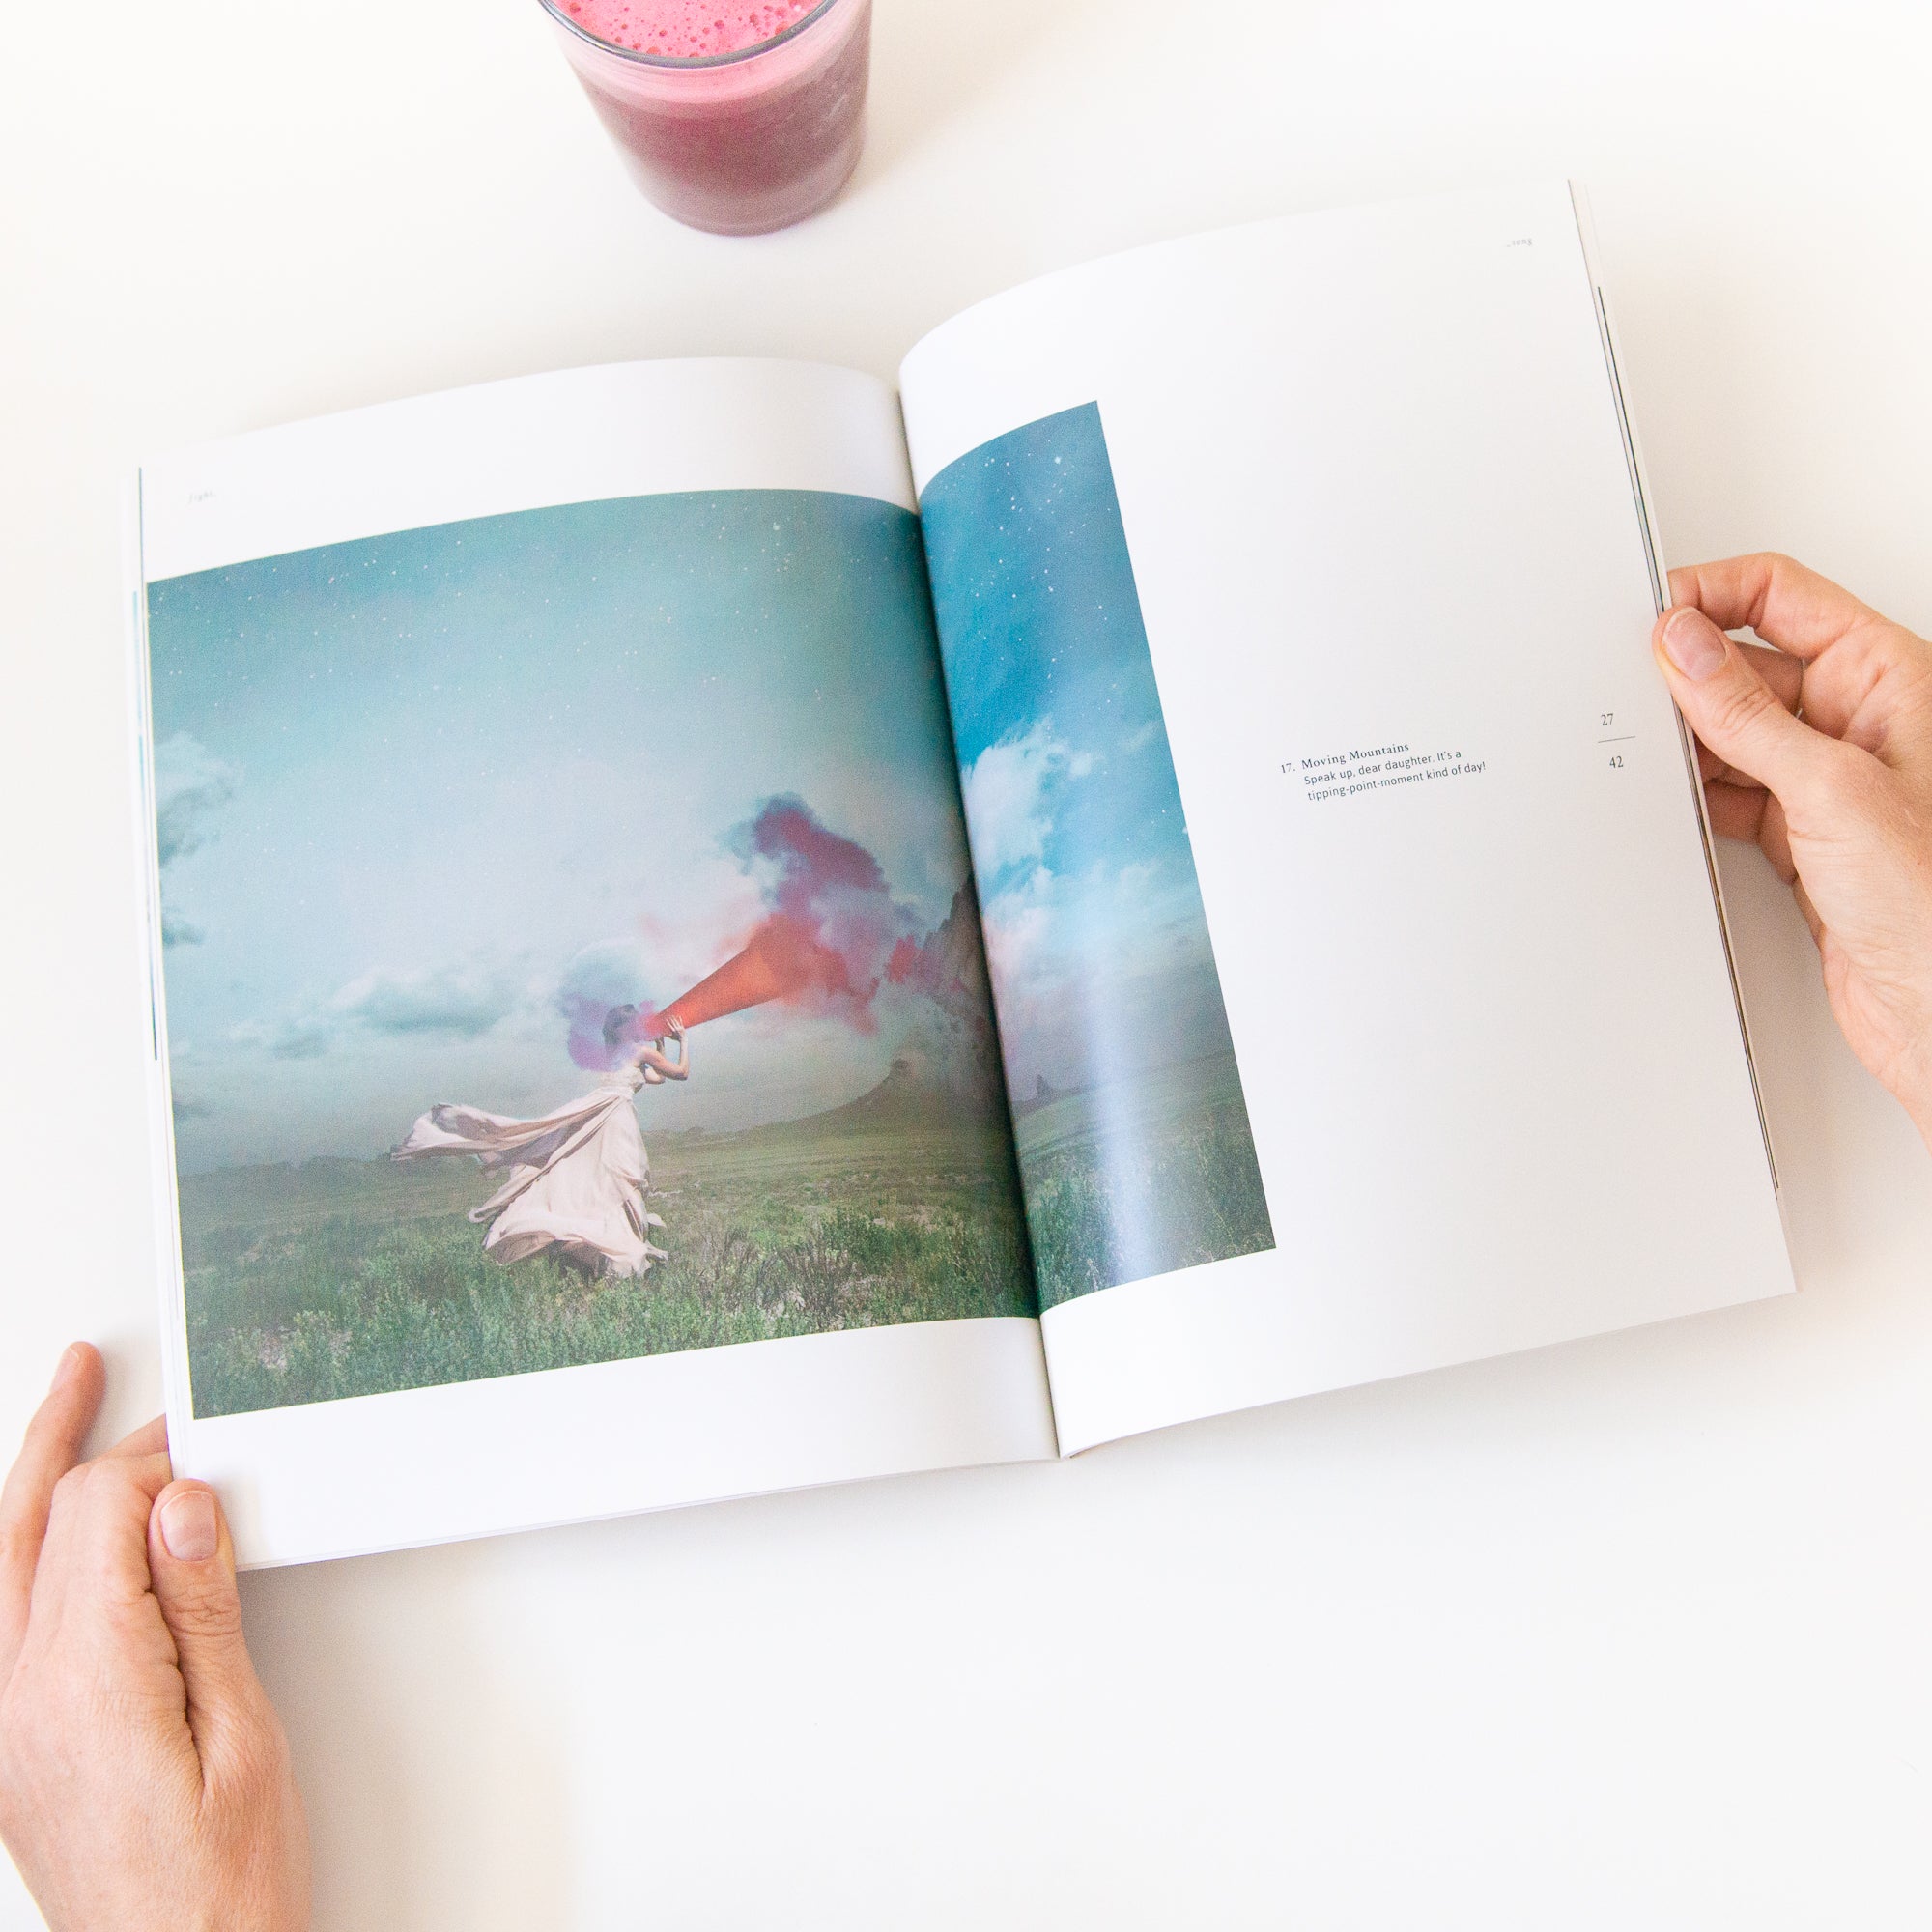 Chasing Magic Coffee Table Book — Kristen Ryan Photography